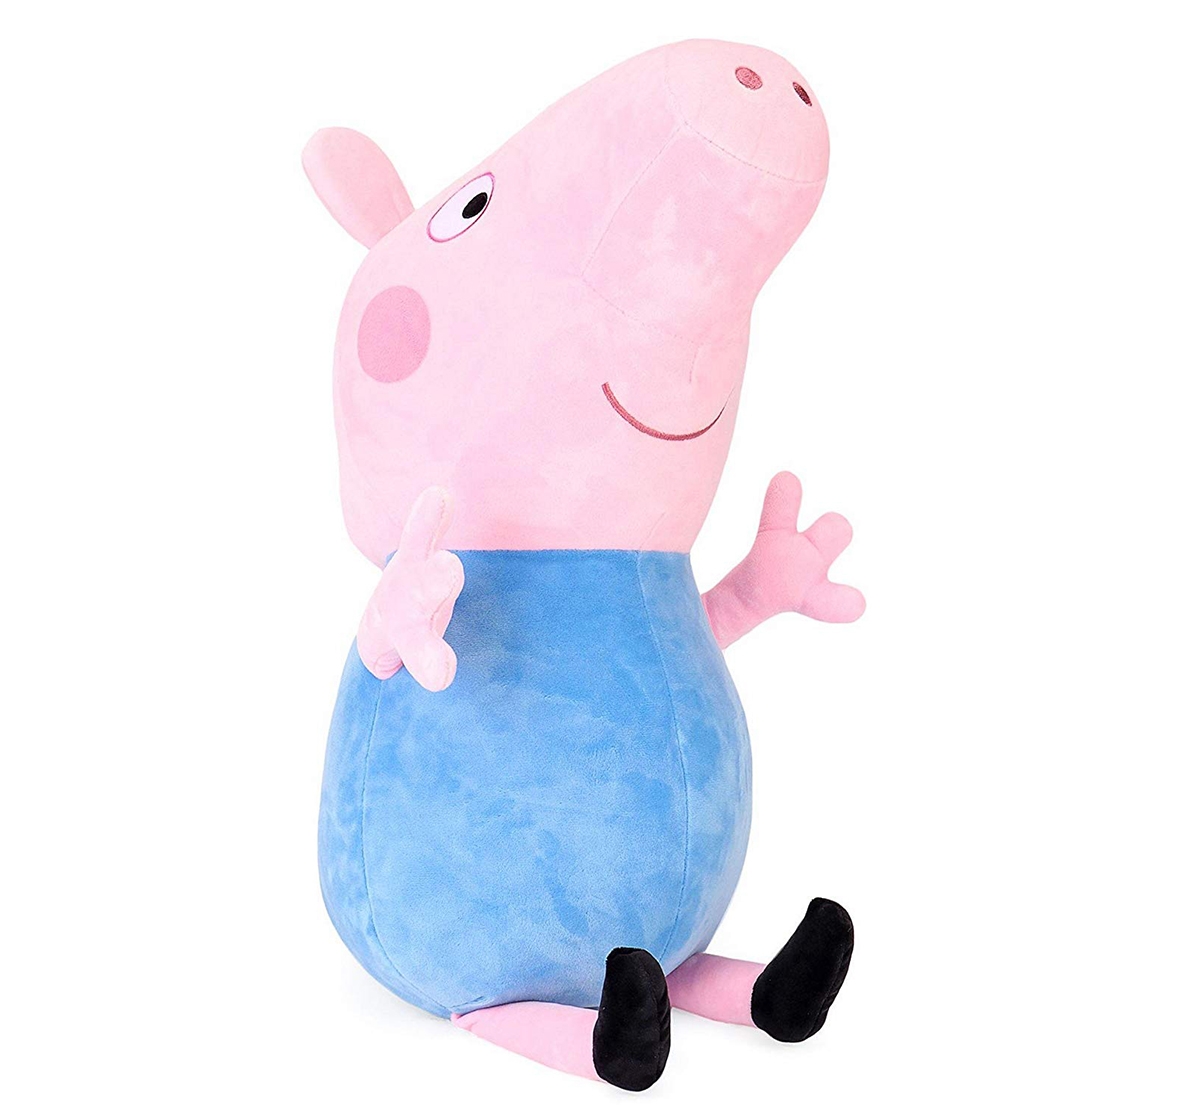 Peppa Pig | Peppa George Pig  Multi Color 46 Cm Soft Toy for Kids age 0M+ (Blue) 0